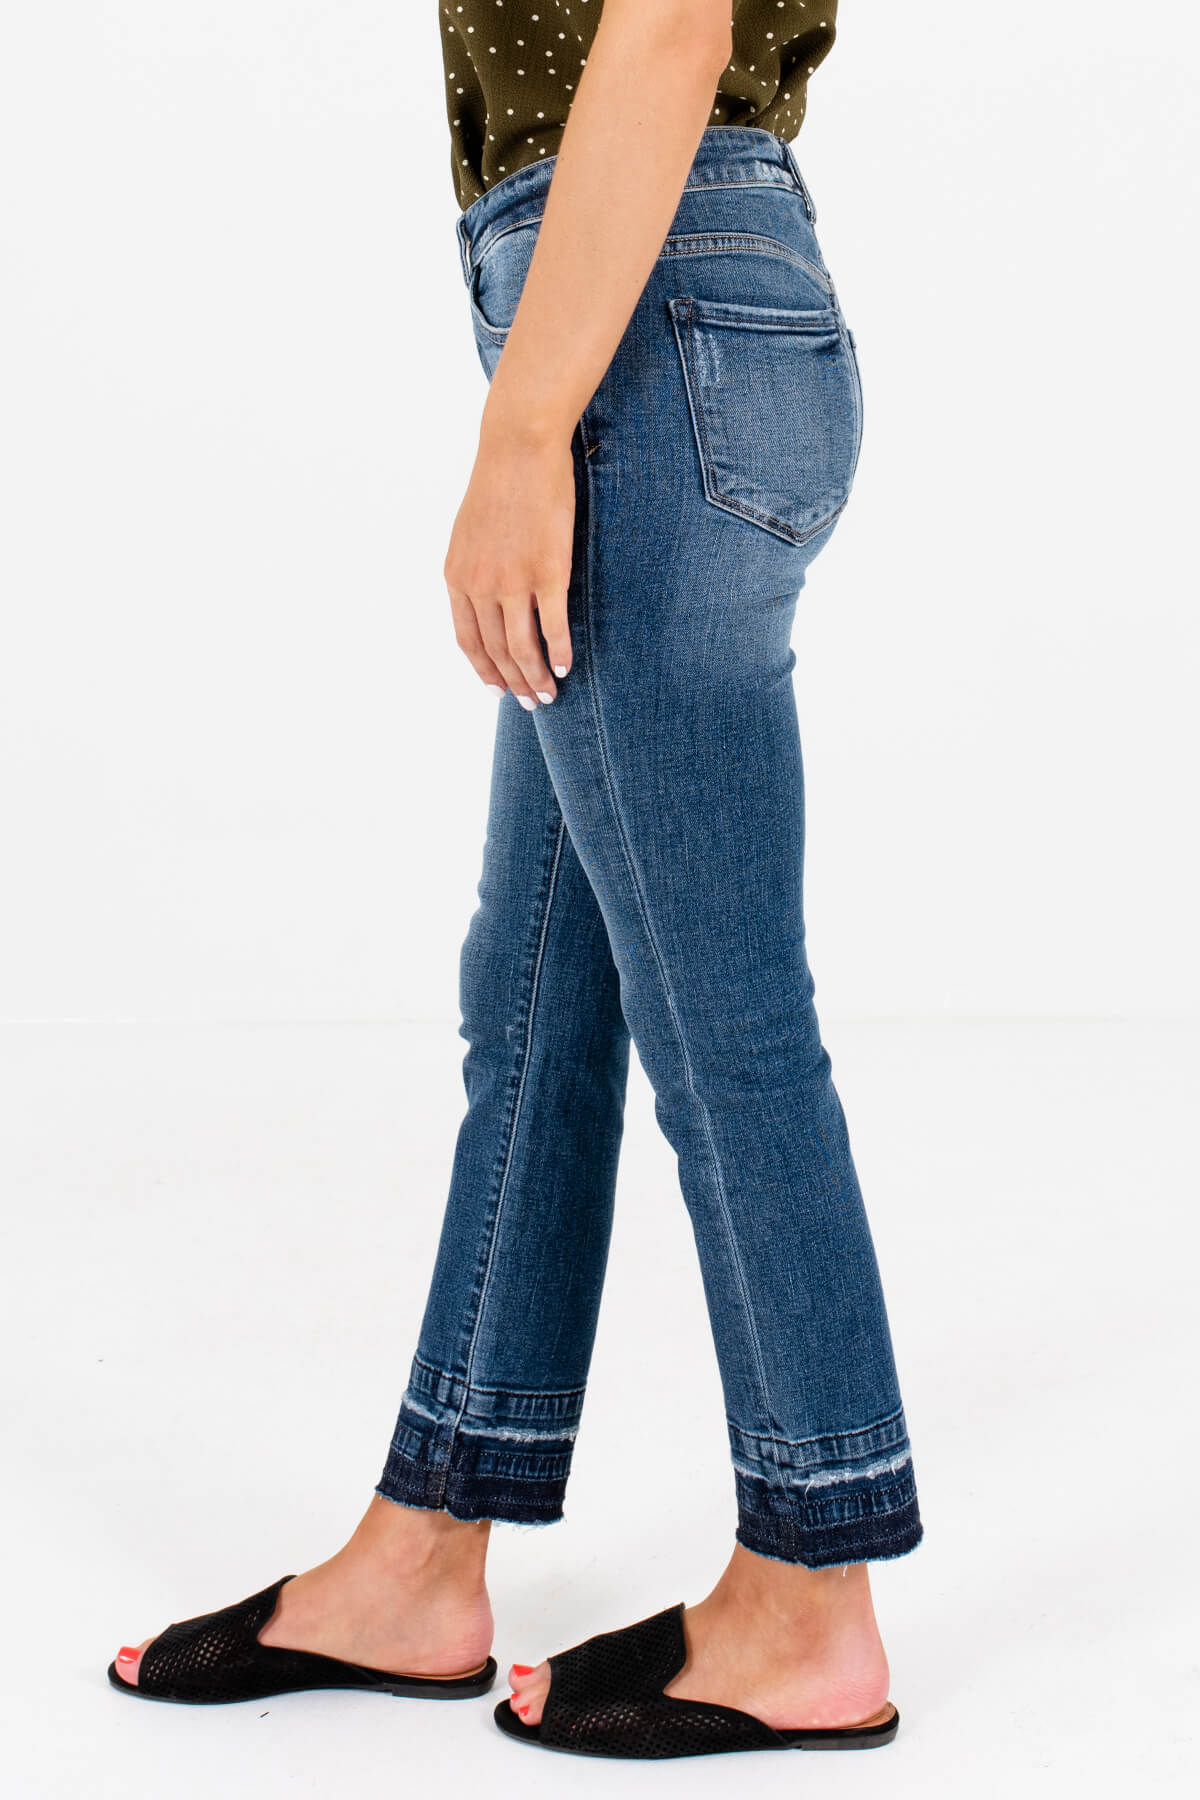 Medium Wash Blue Denim Distressed Patches Boutique Jeans for Women